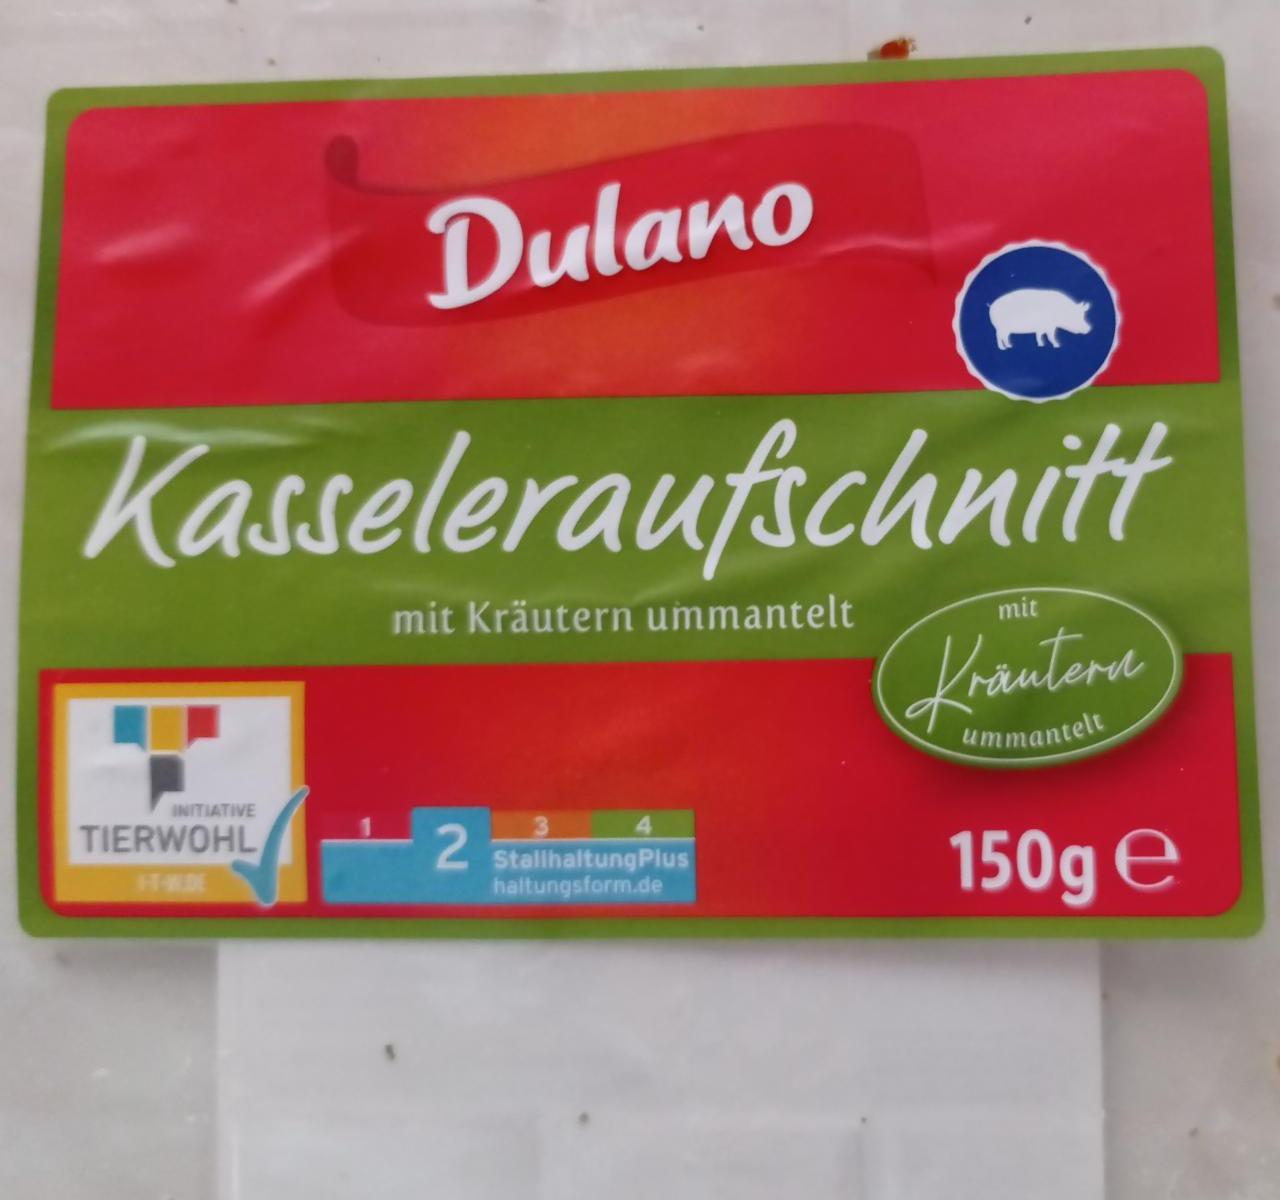 Fotografie - Kasseleraufschnitt Dulano